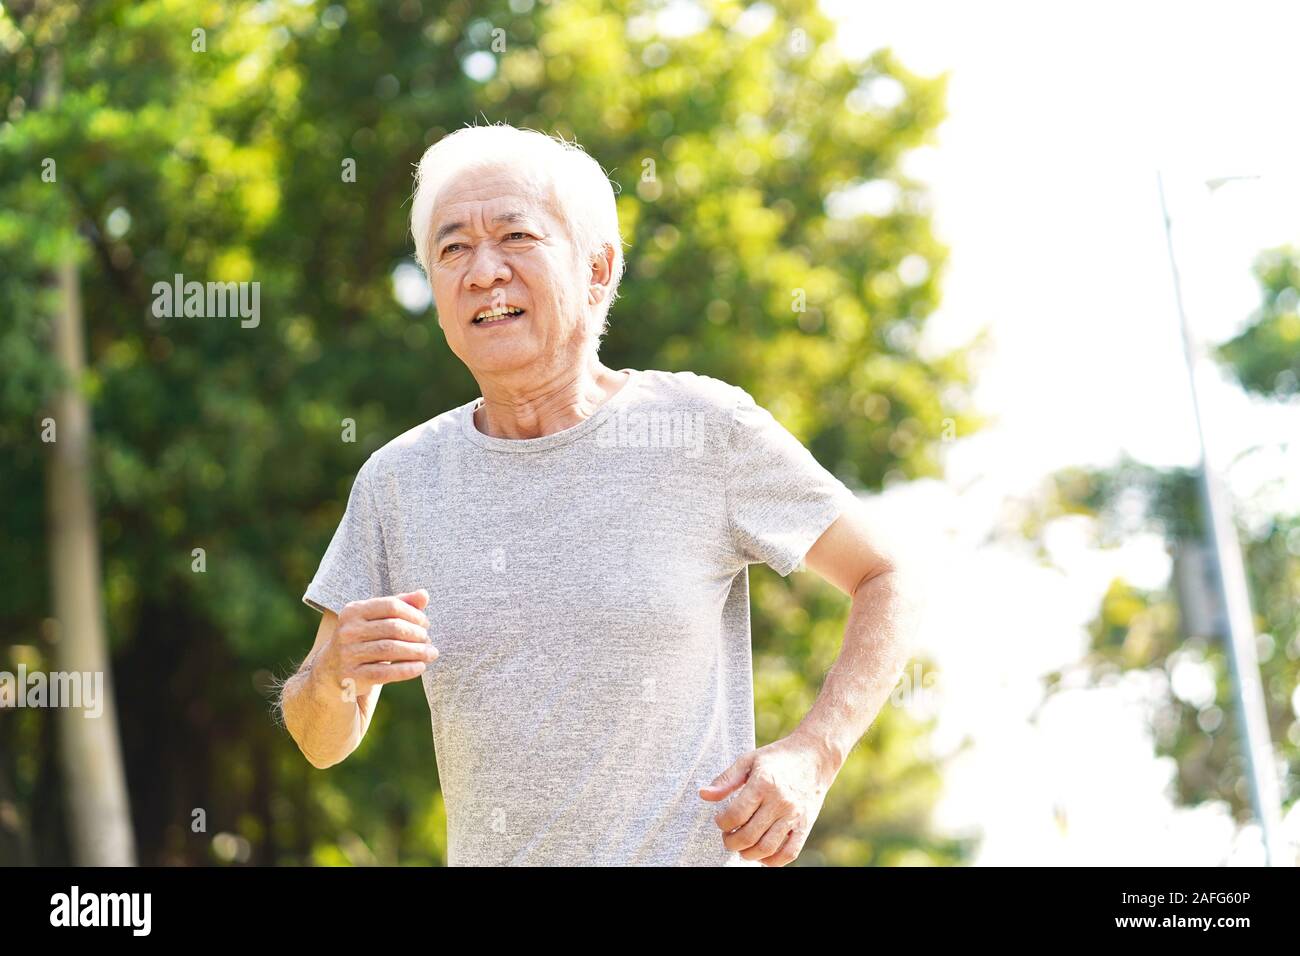 Senior asian man jogging running outdoors in park Banque D'Images